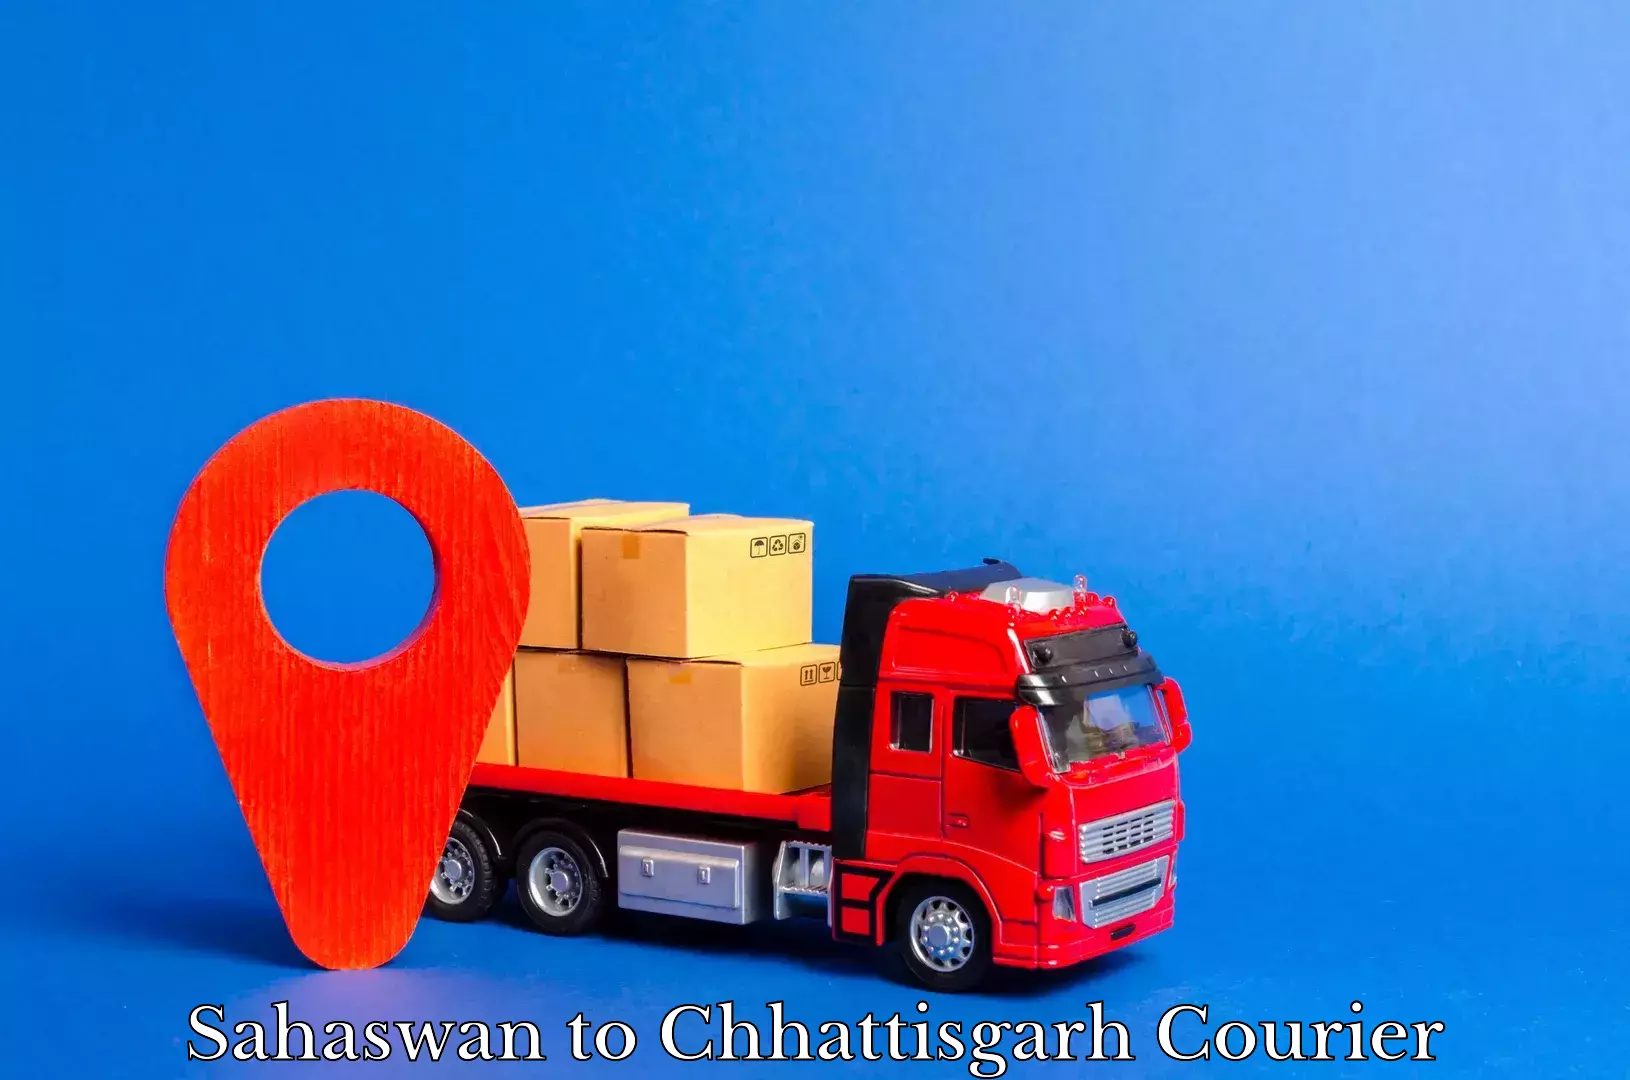 Courier service booking Sahaswan to Chhattisgarh